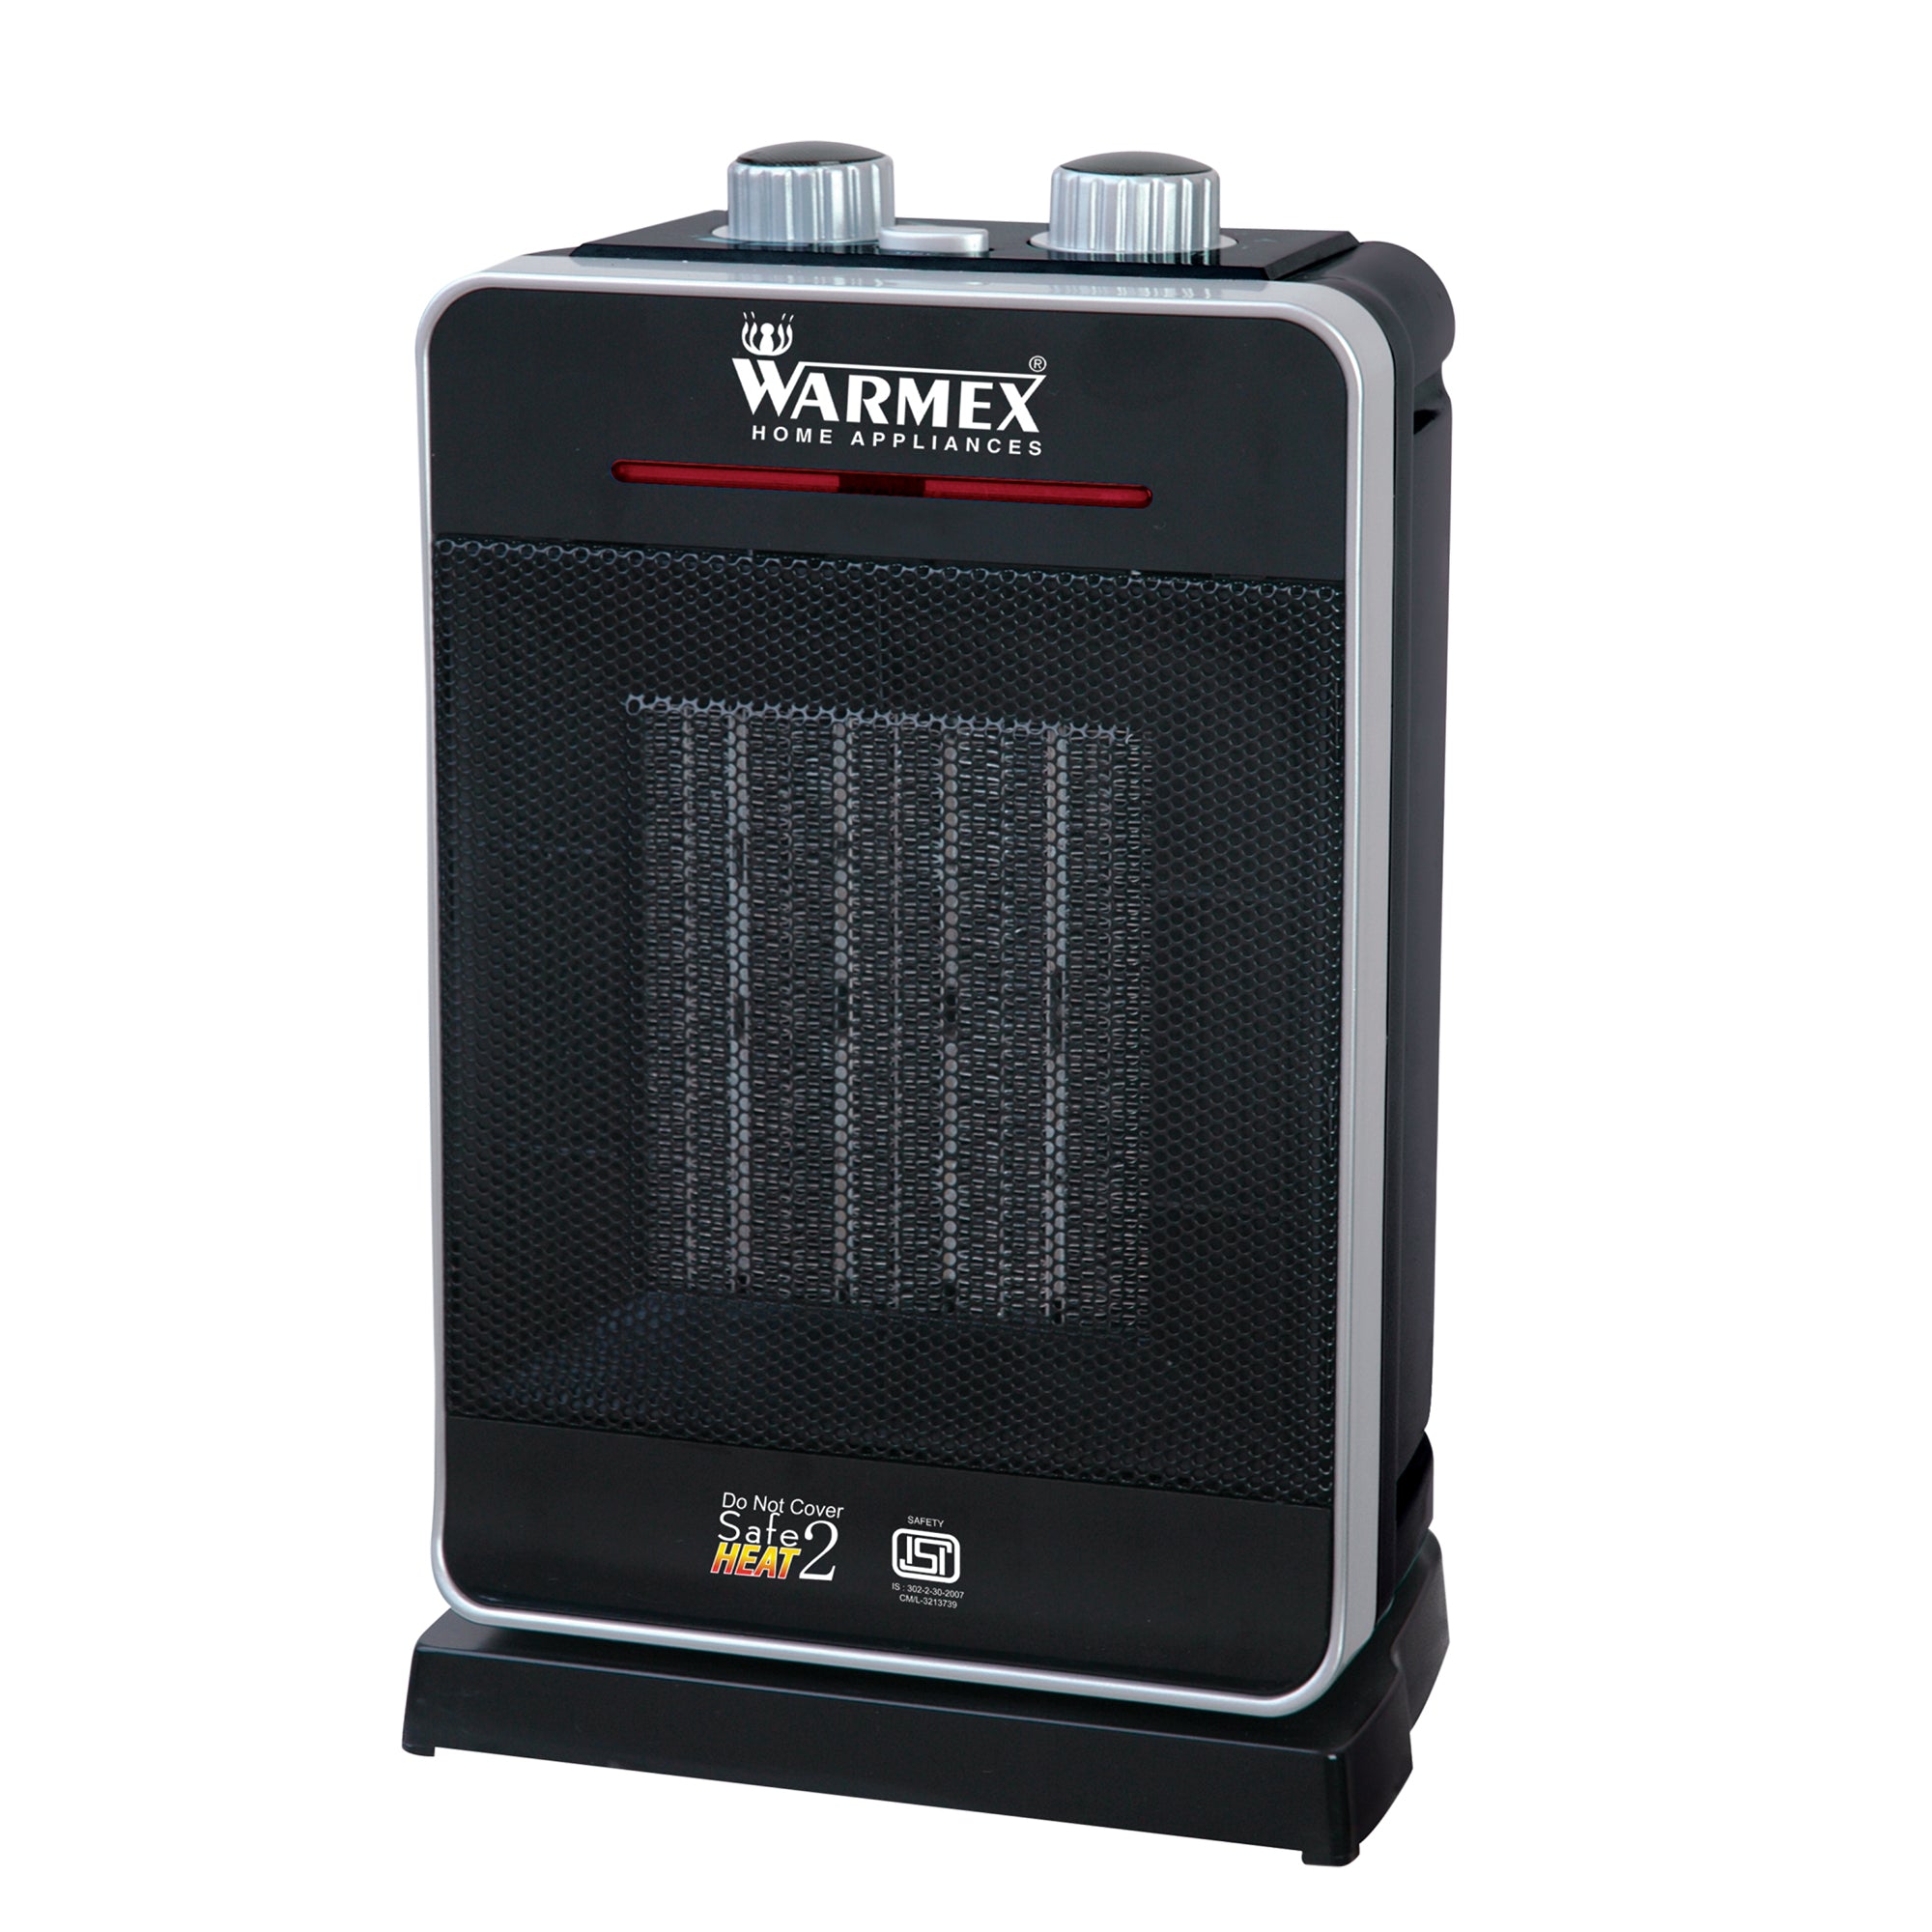 Warmex 1000/2000 Watts Table Top PTC Room Heater (PTC 99 N) warmexhomeappliances2